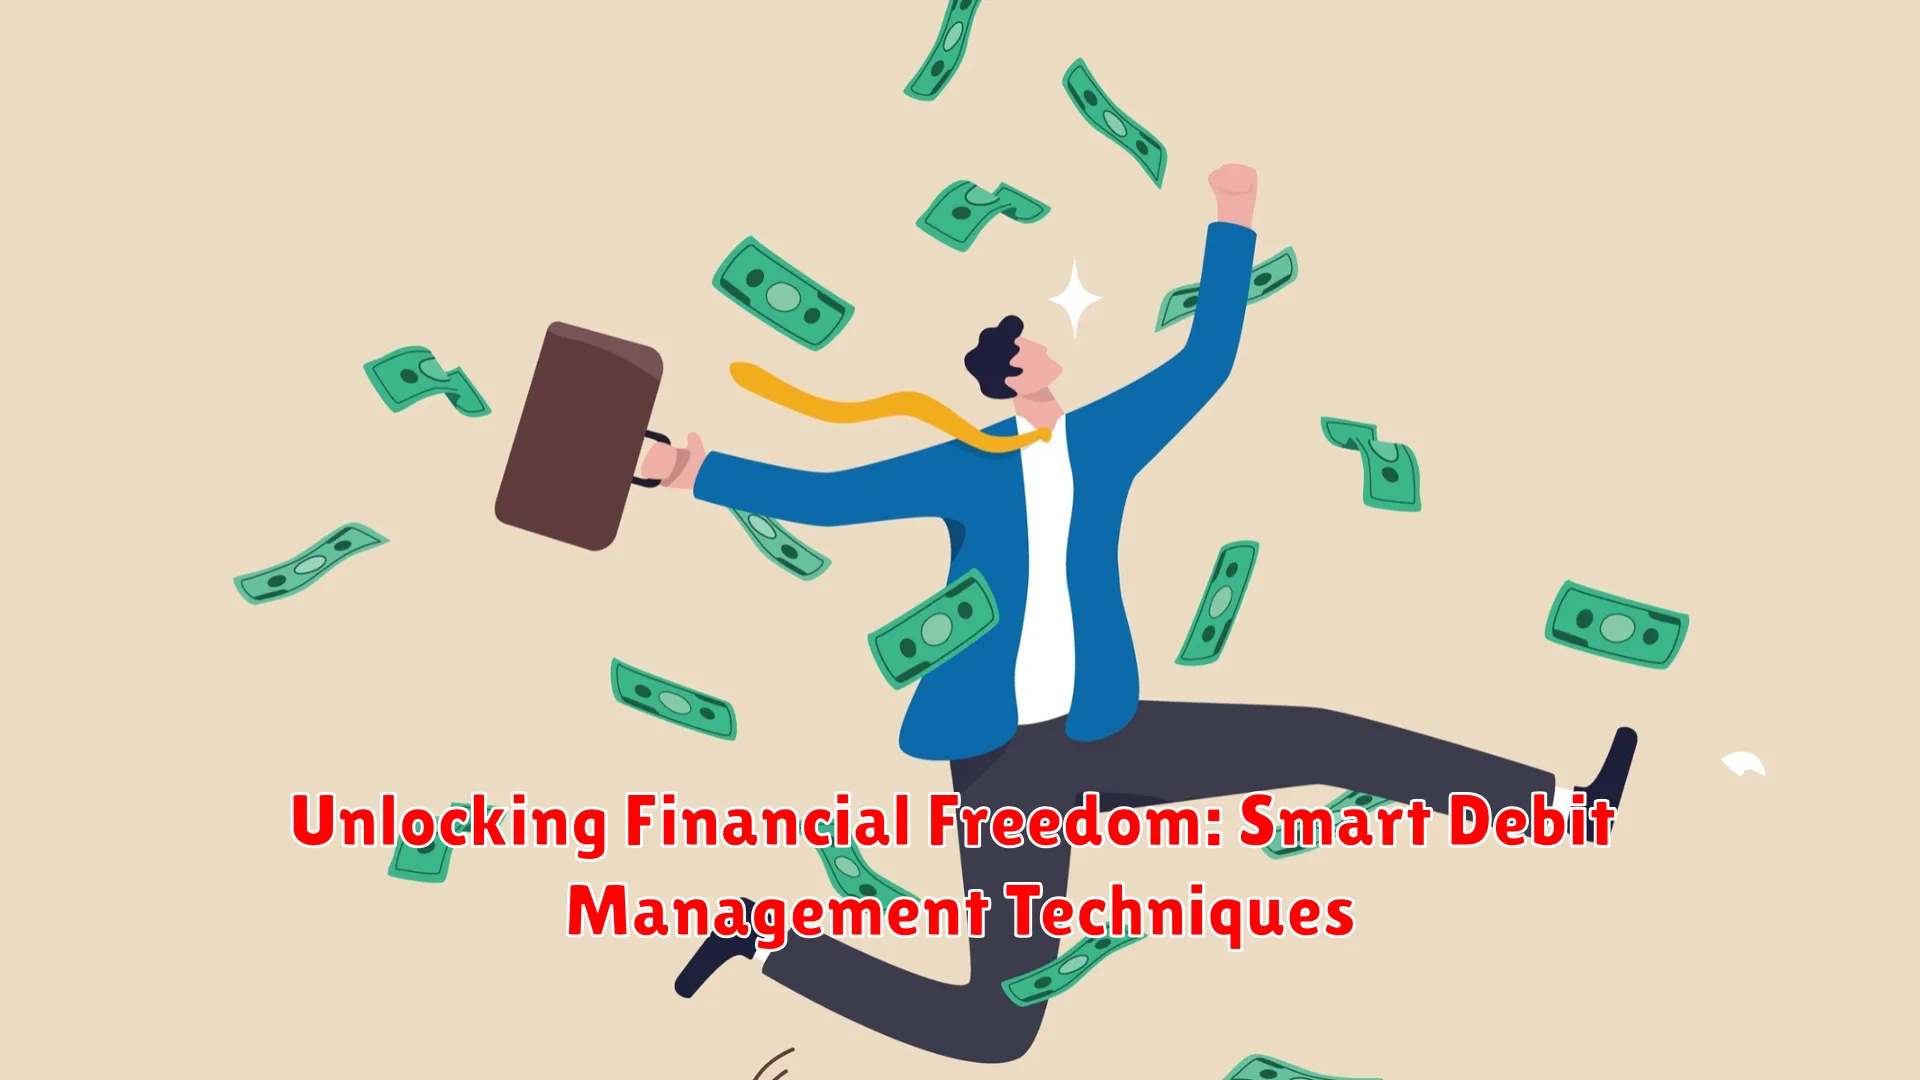 Unlocking Financial Freedom: Smart Debit Management Techniques